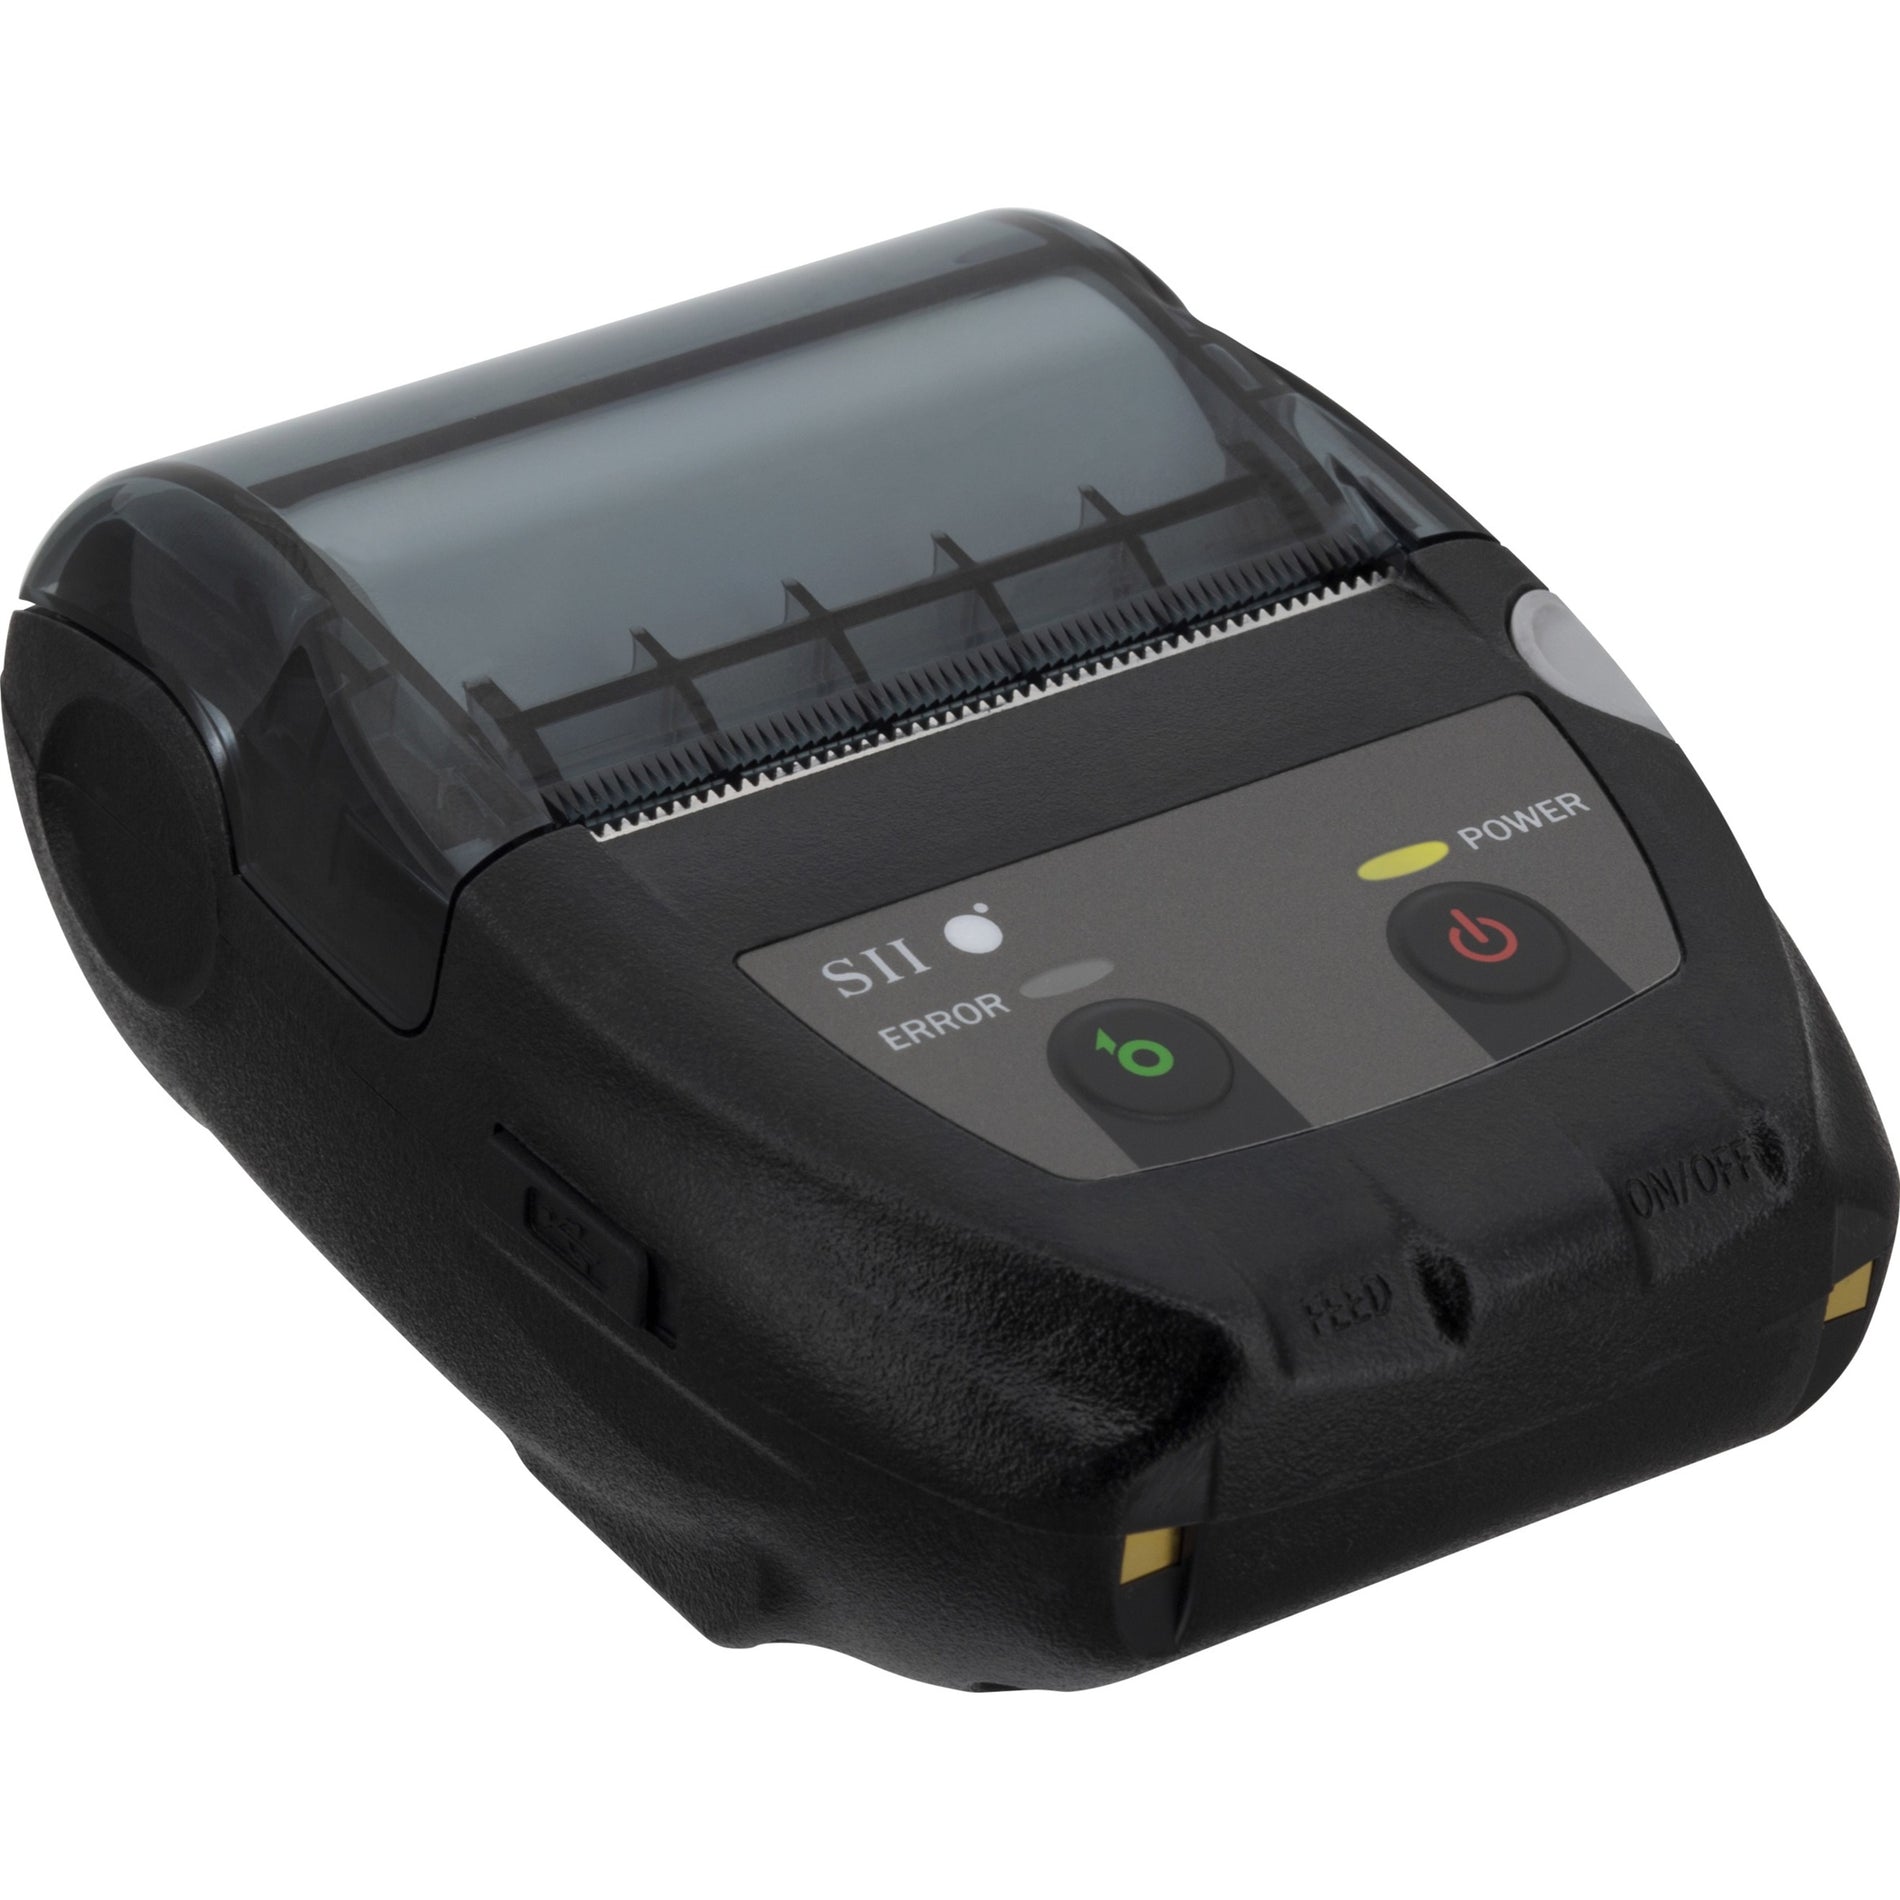 Seiko MP-B20-B02JK1-74 MP-B20 Compact Mobile Printer, USB, Bluetooth, Compact, Lightweight, Rugged, Monochrome, 1.89" Print Width, 3.15 in/s Print Speed